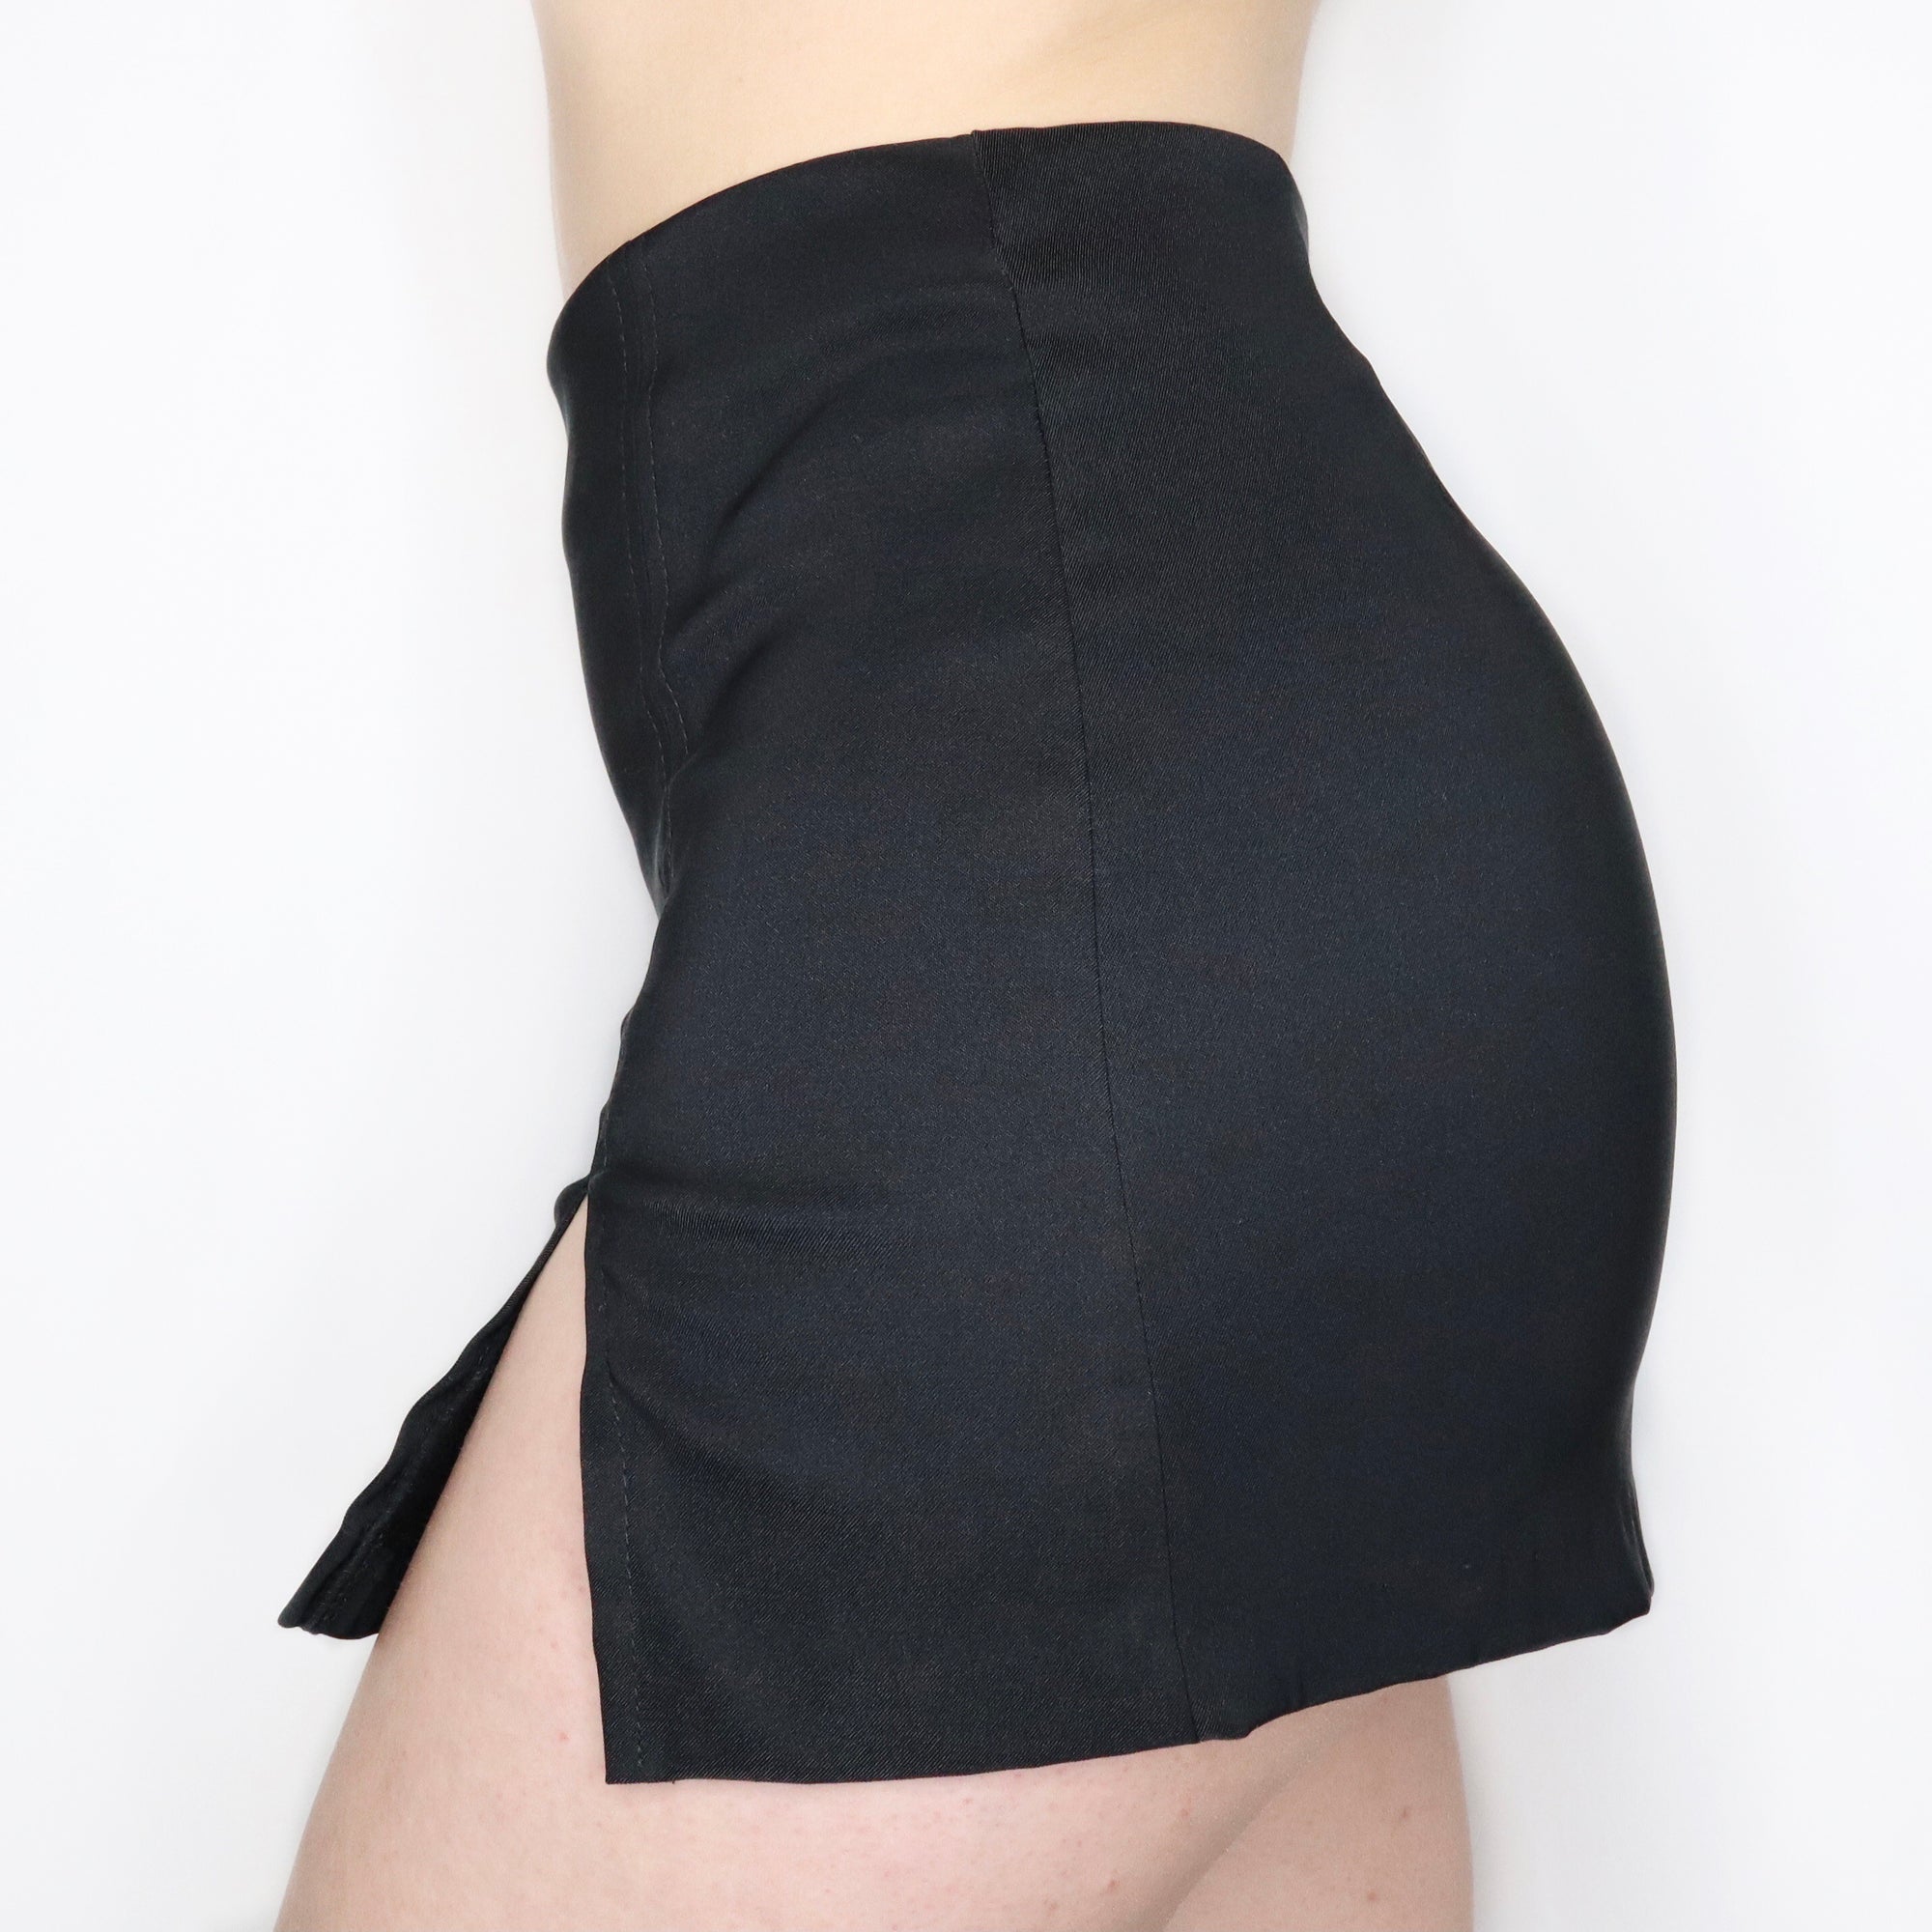 Vintage 90s High Waisted Black Mini Skirt